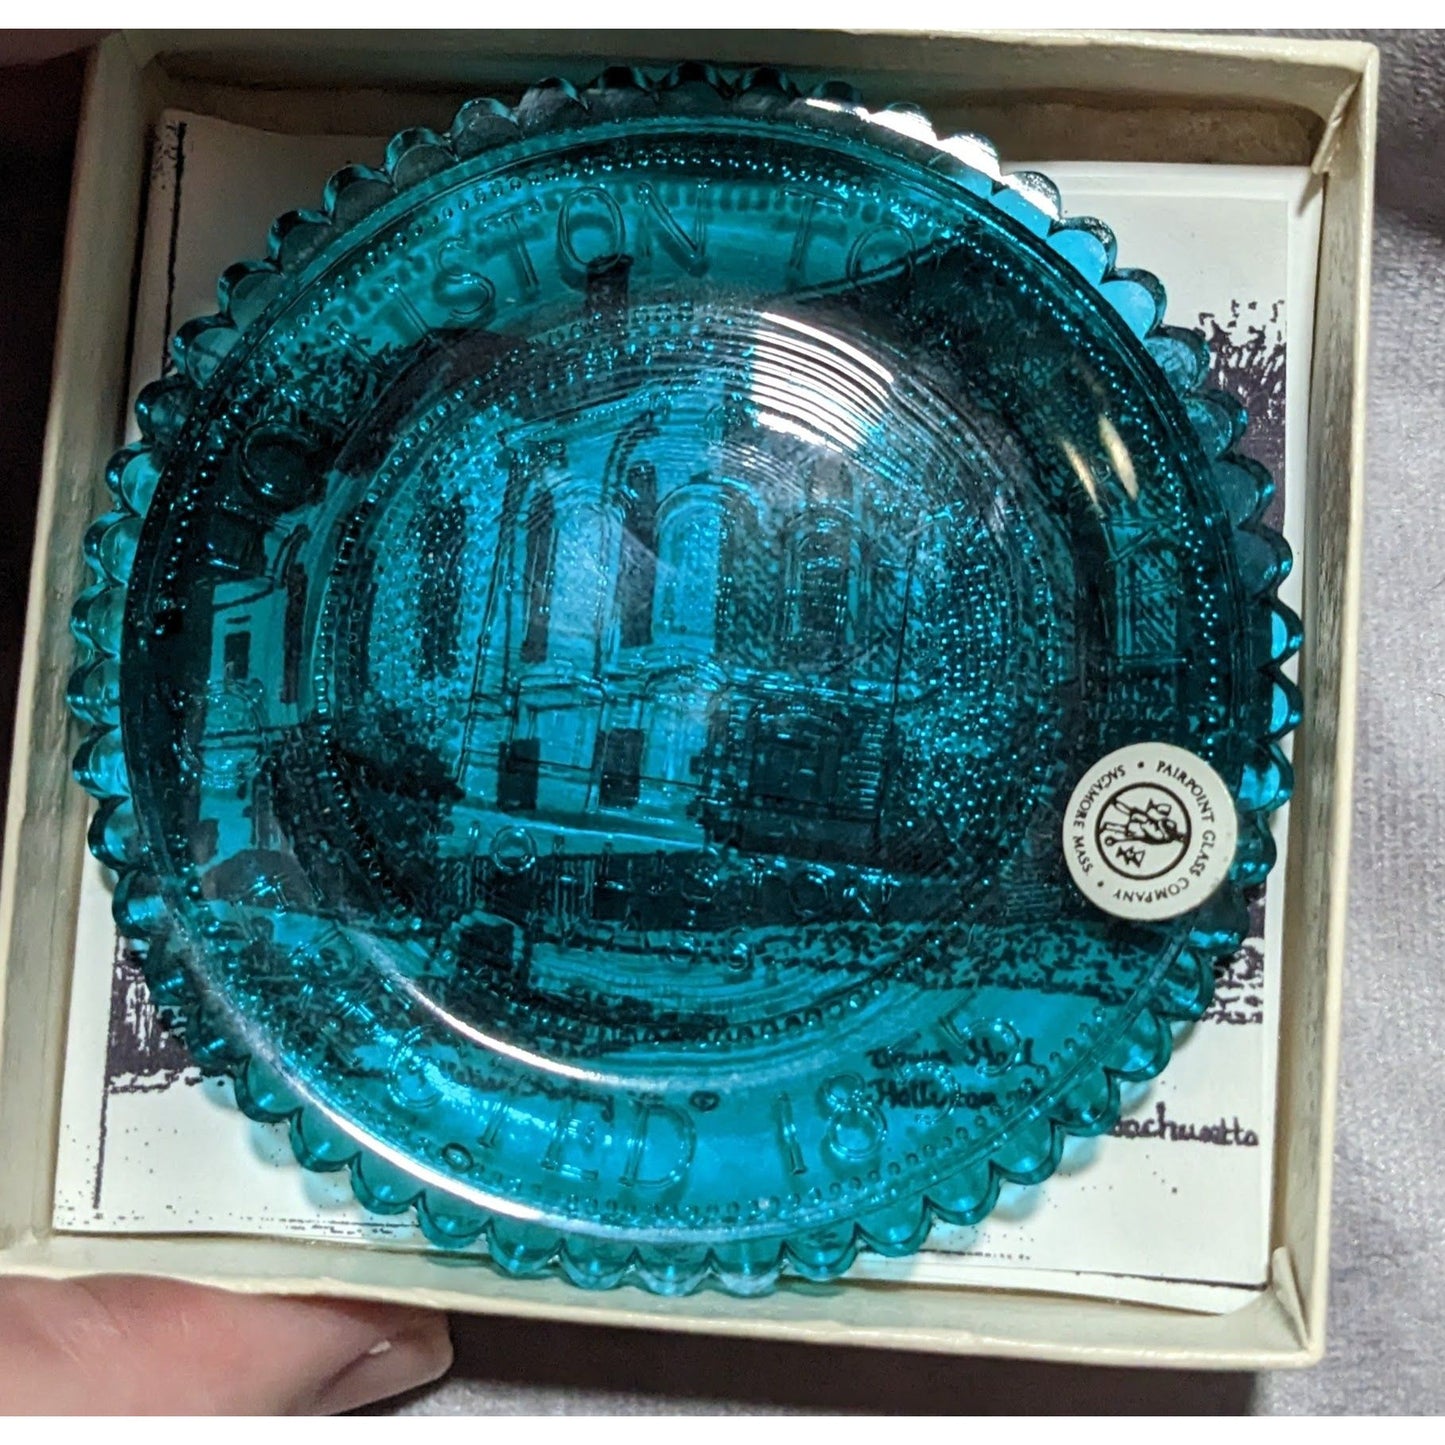 Fairpoint Glass Company Holliston Mass MIni Souvenir Plate